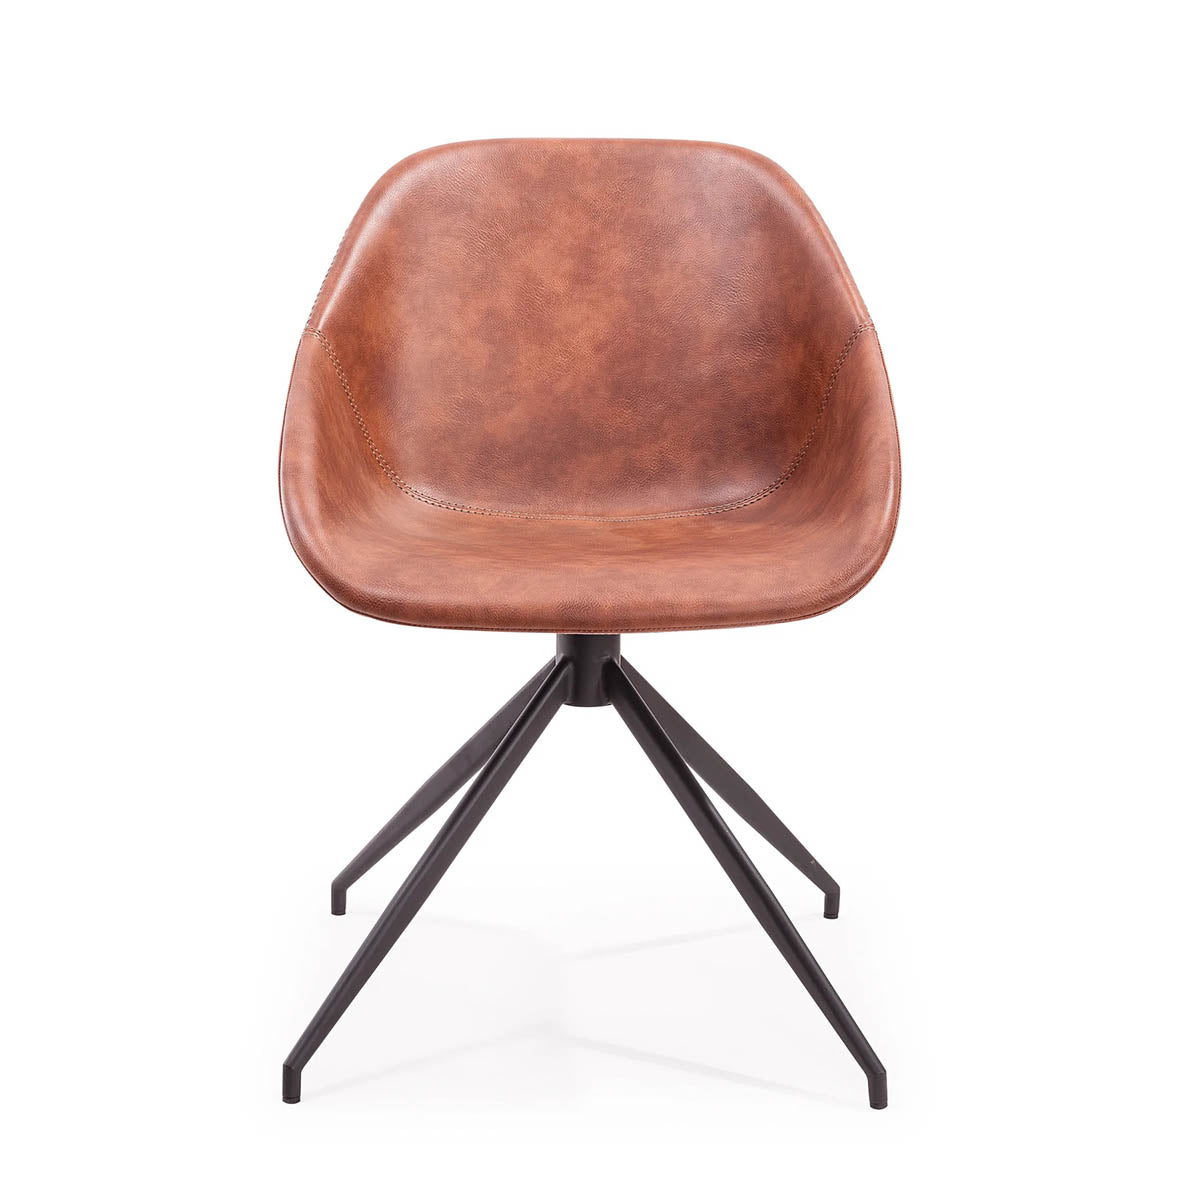 Lansel Swivel Dining Chair (Tan Leather).